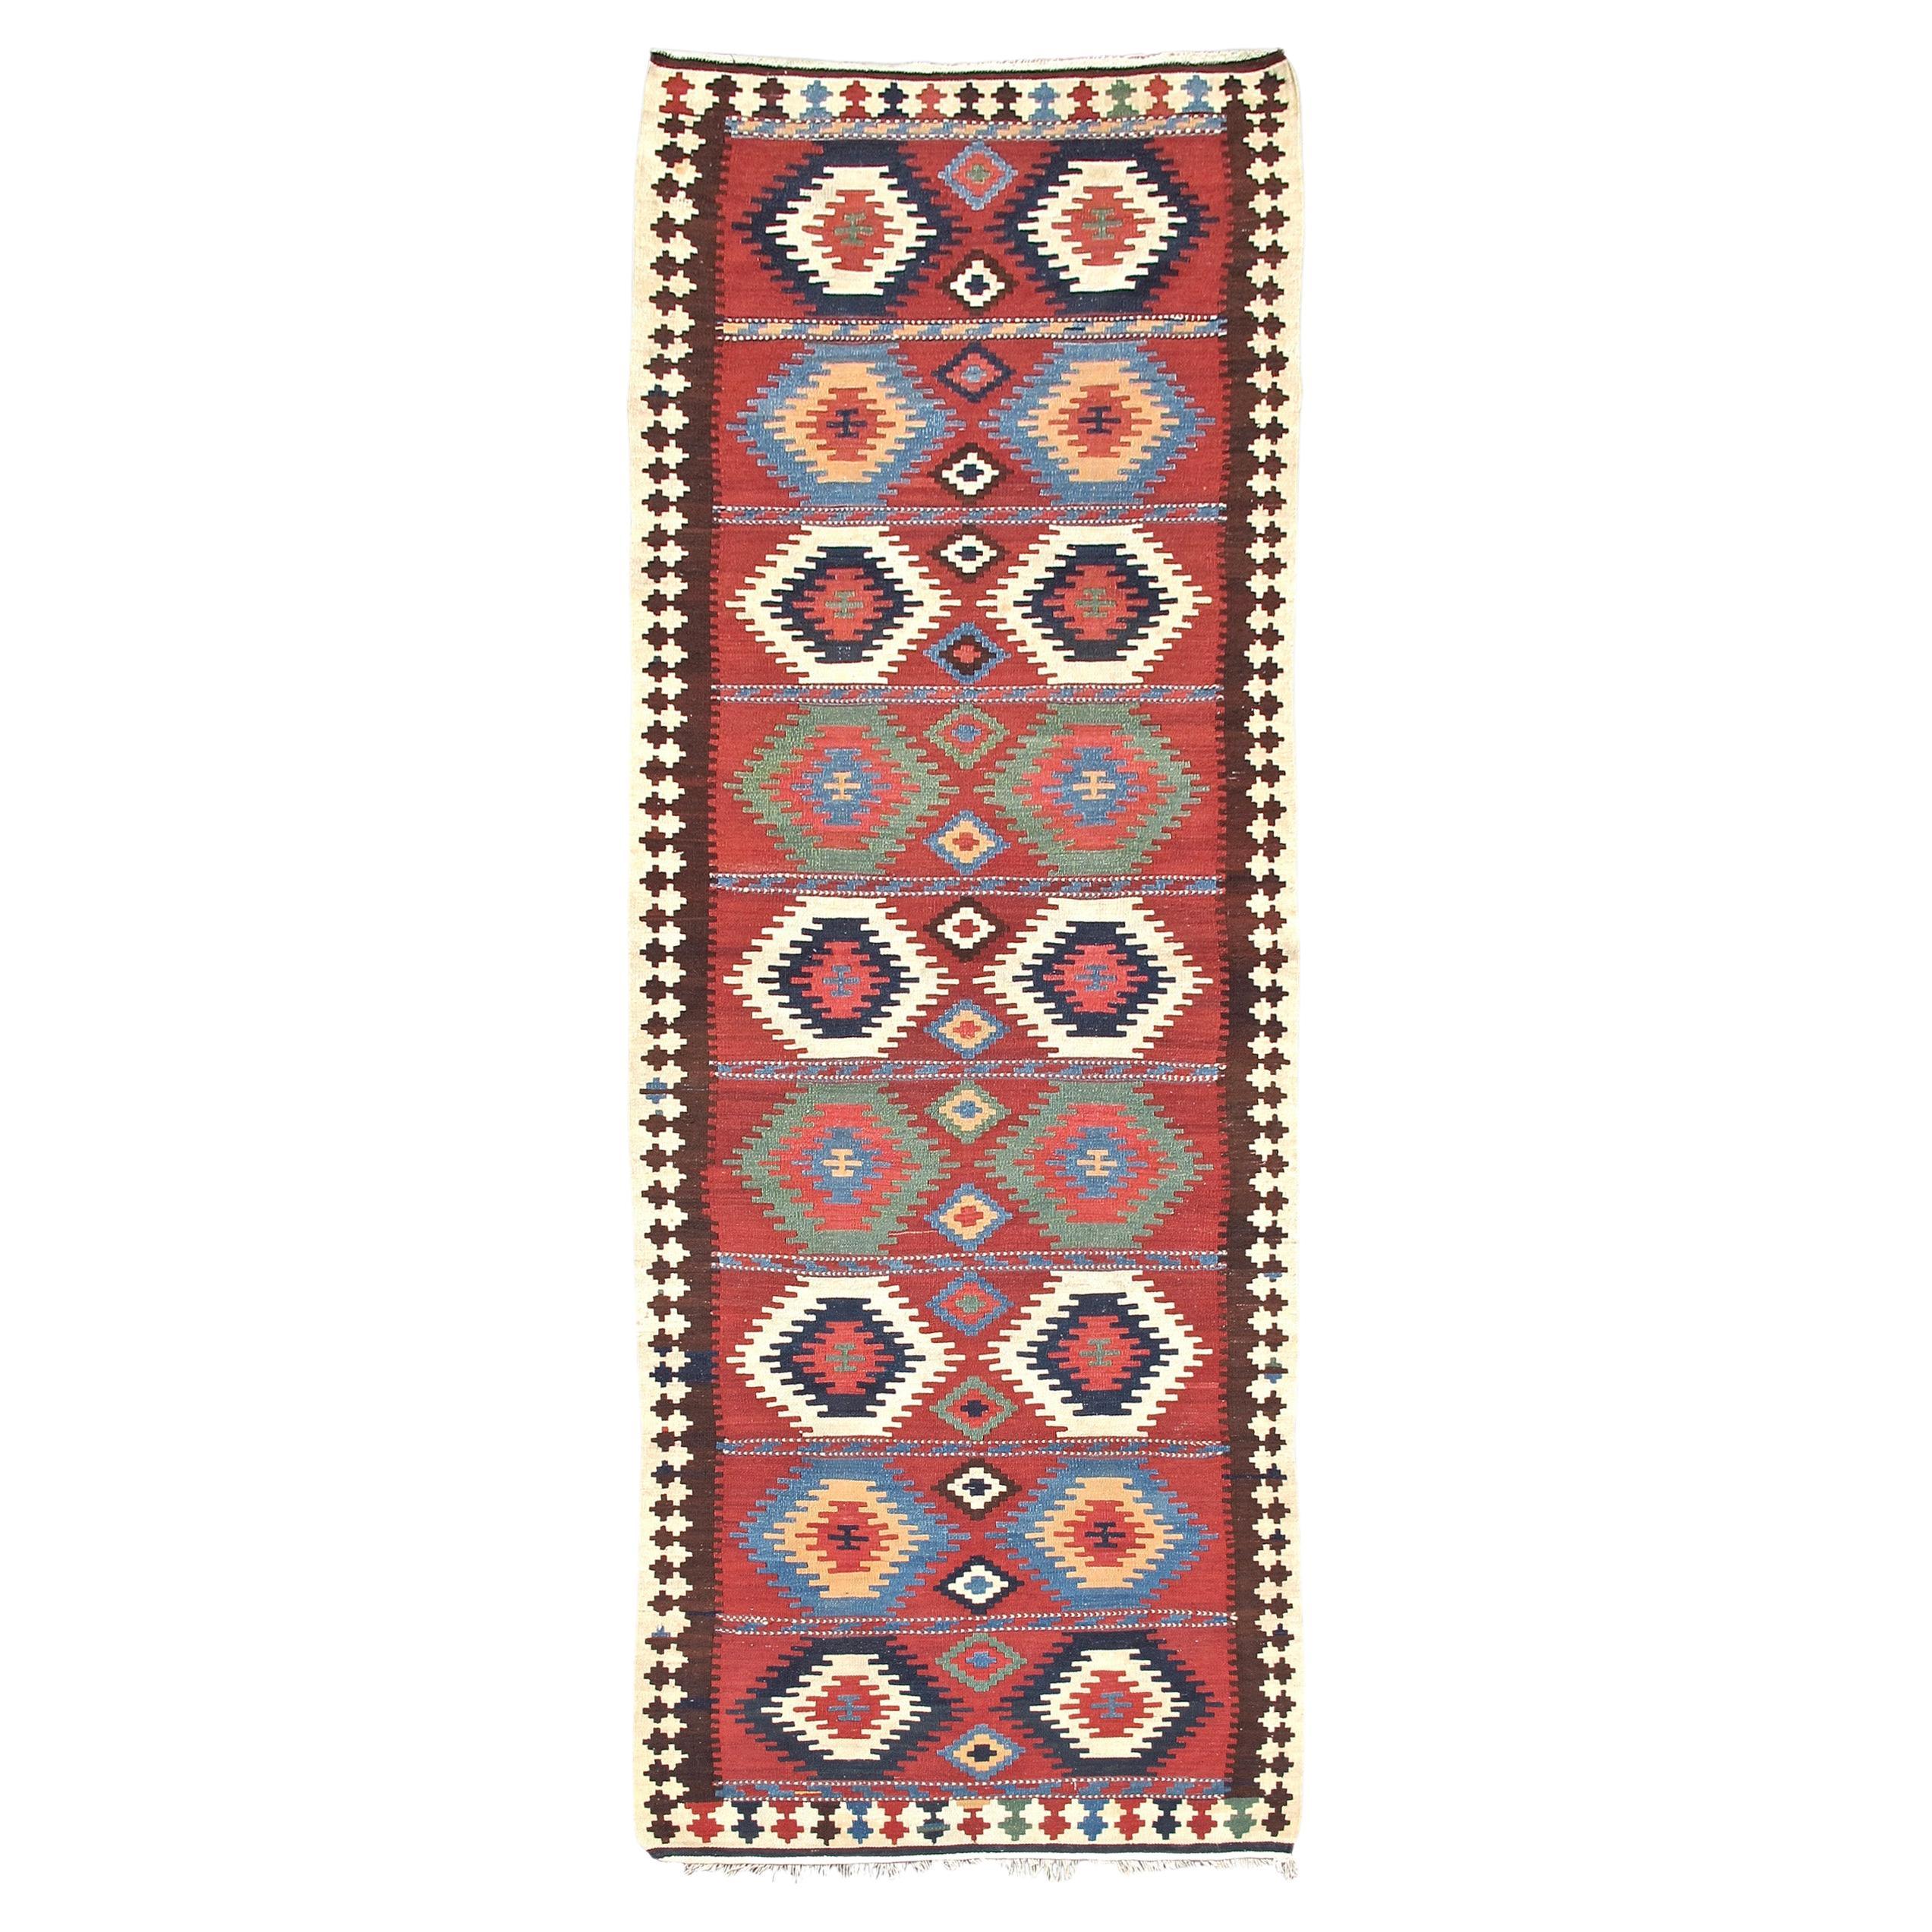 Antique Persian Shahsevan Kilim Rug, c. 1900 For Sale